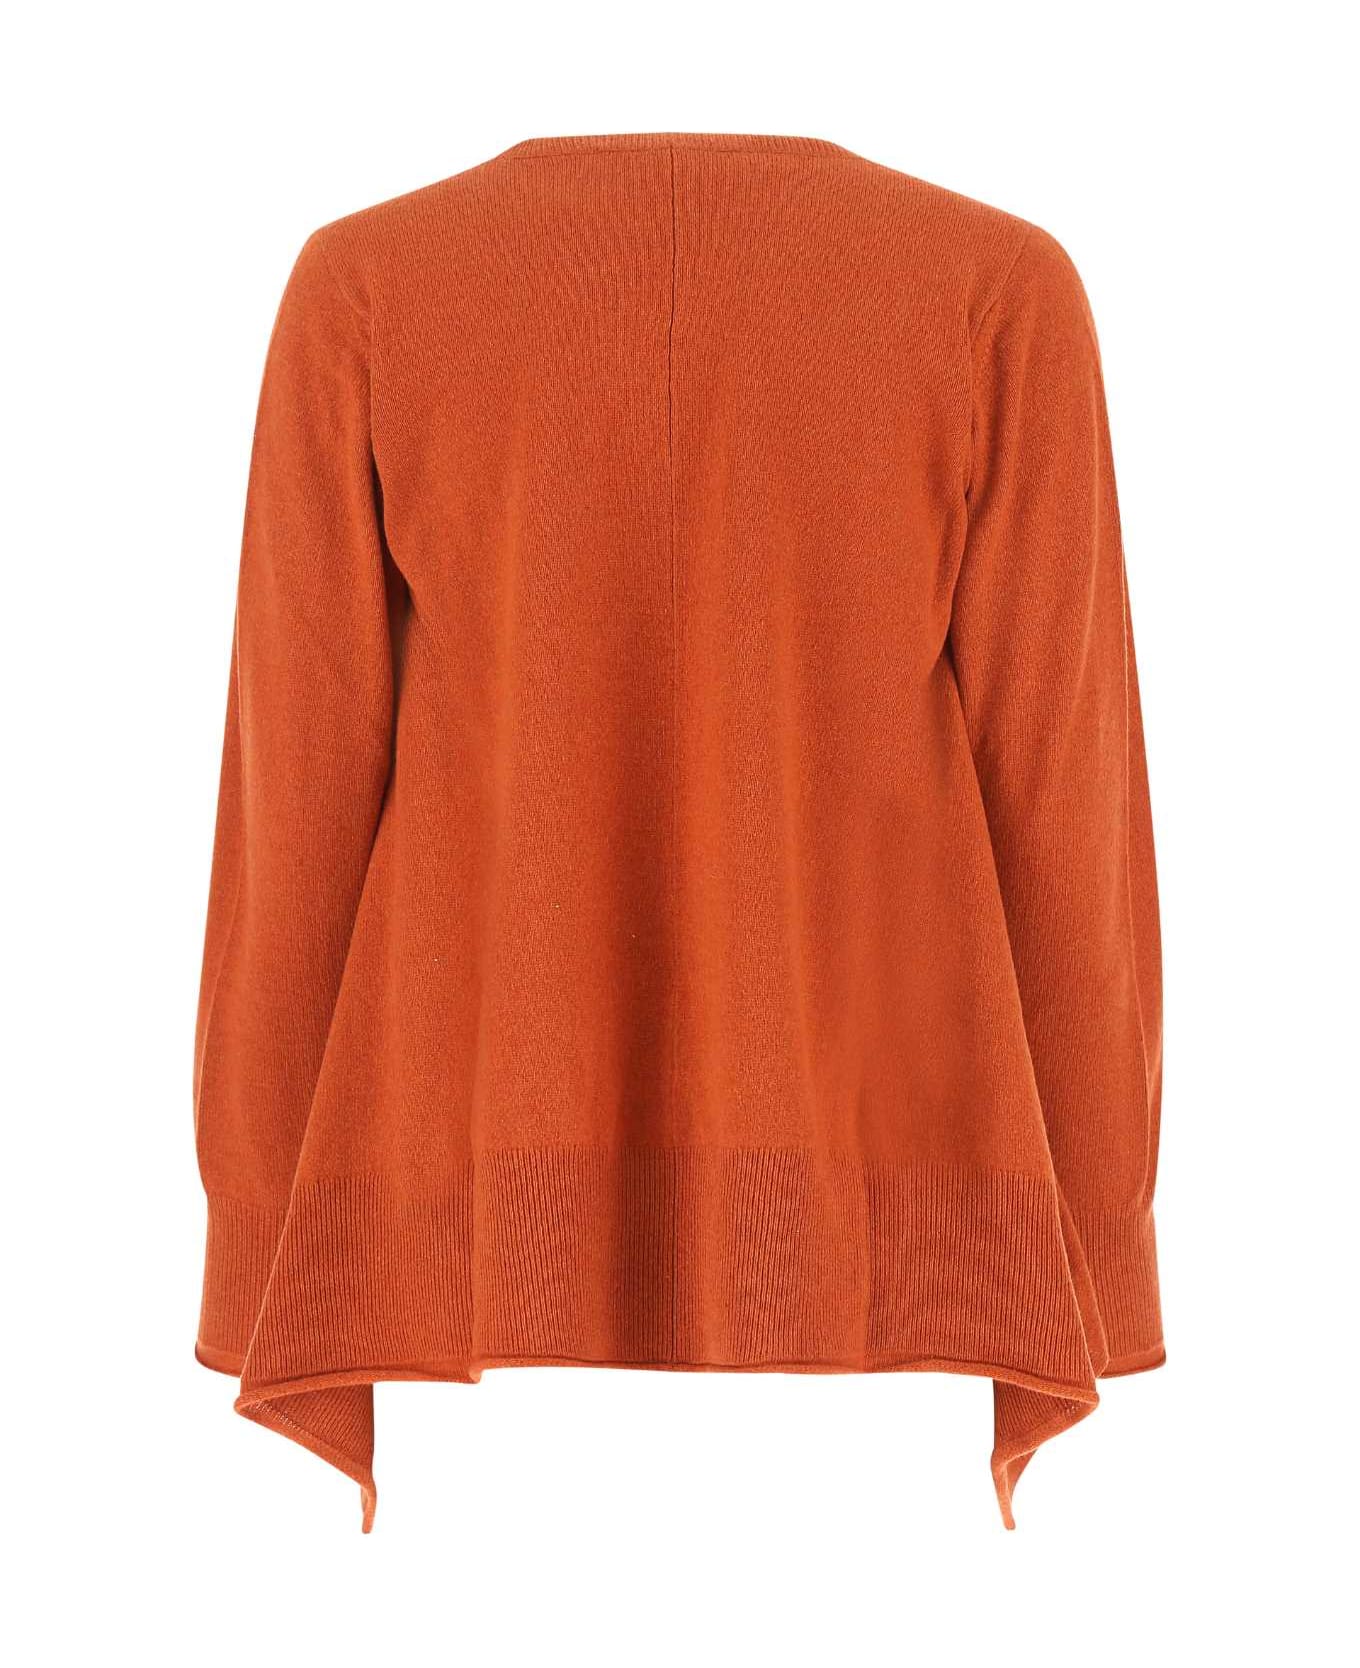 Stella McCartney Copper Cashmere Blend Oversize Sweater - 6302 ニットウェア